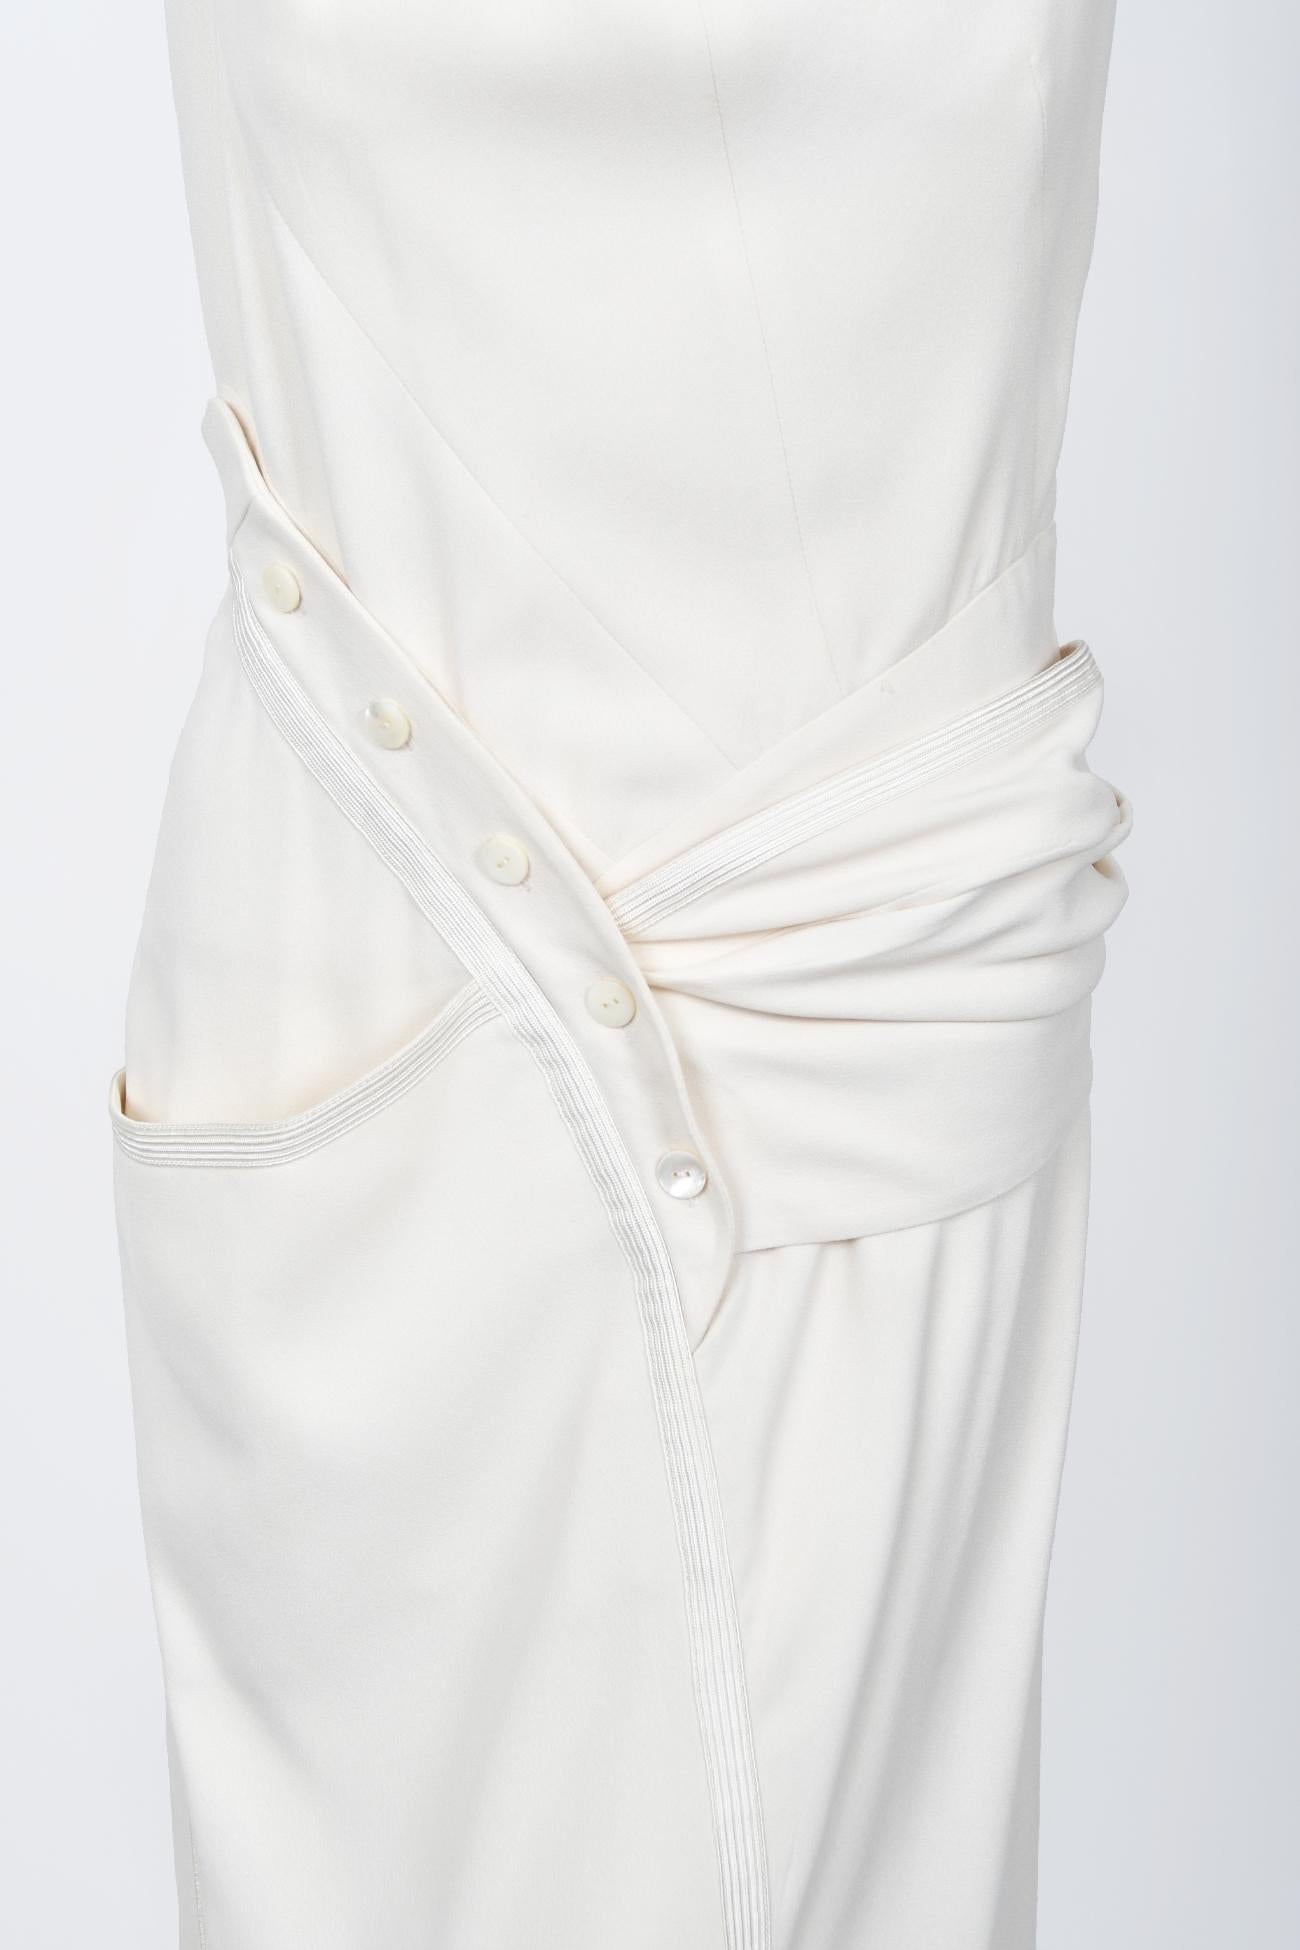 2000 Christian Dior by John Galliano Ivory Crepe Cut-Out Asymmetric Draped Dress 3